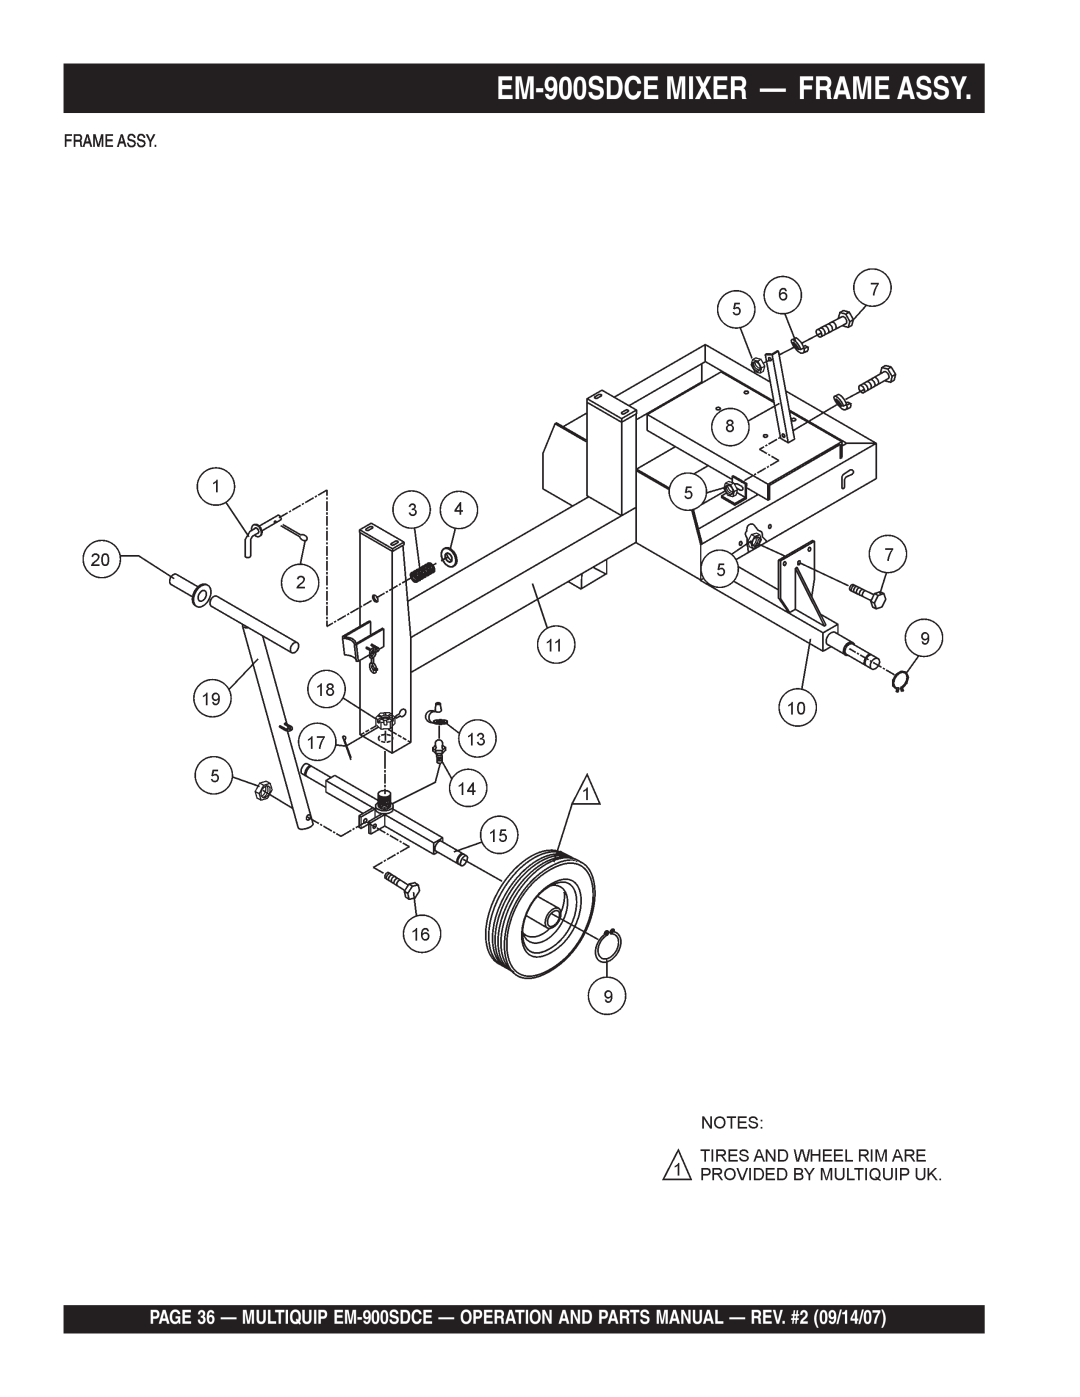 Multiquip manual EM-900SDCEMIXER — FRAME ASSY, Frame Assy 